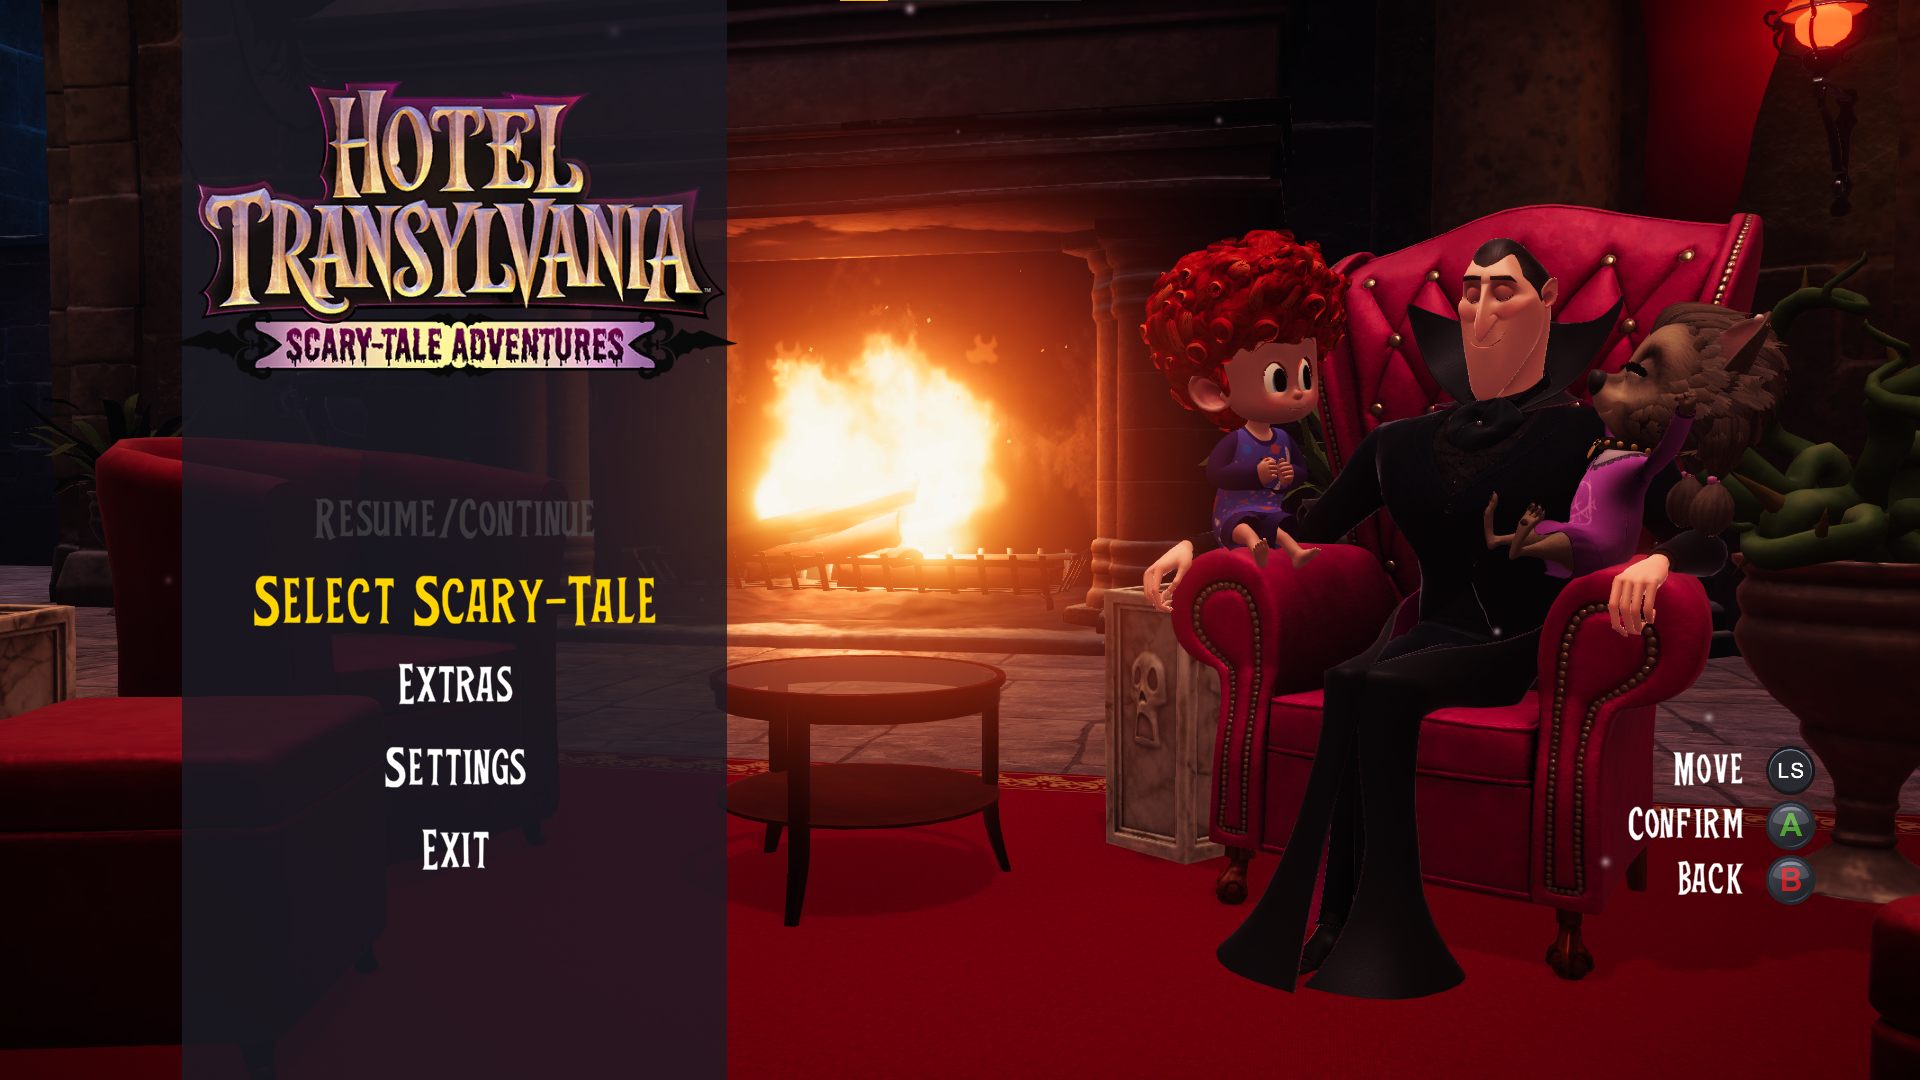 Scary tale. Hotel Transylvania: Scary-Tale Adventures. Hotel Transylvania Adventures.